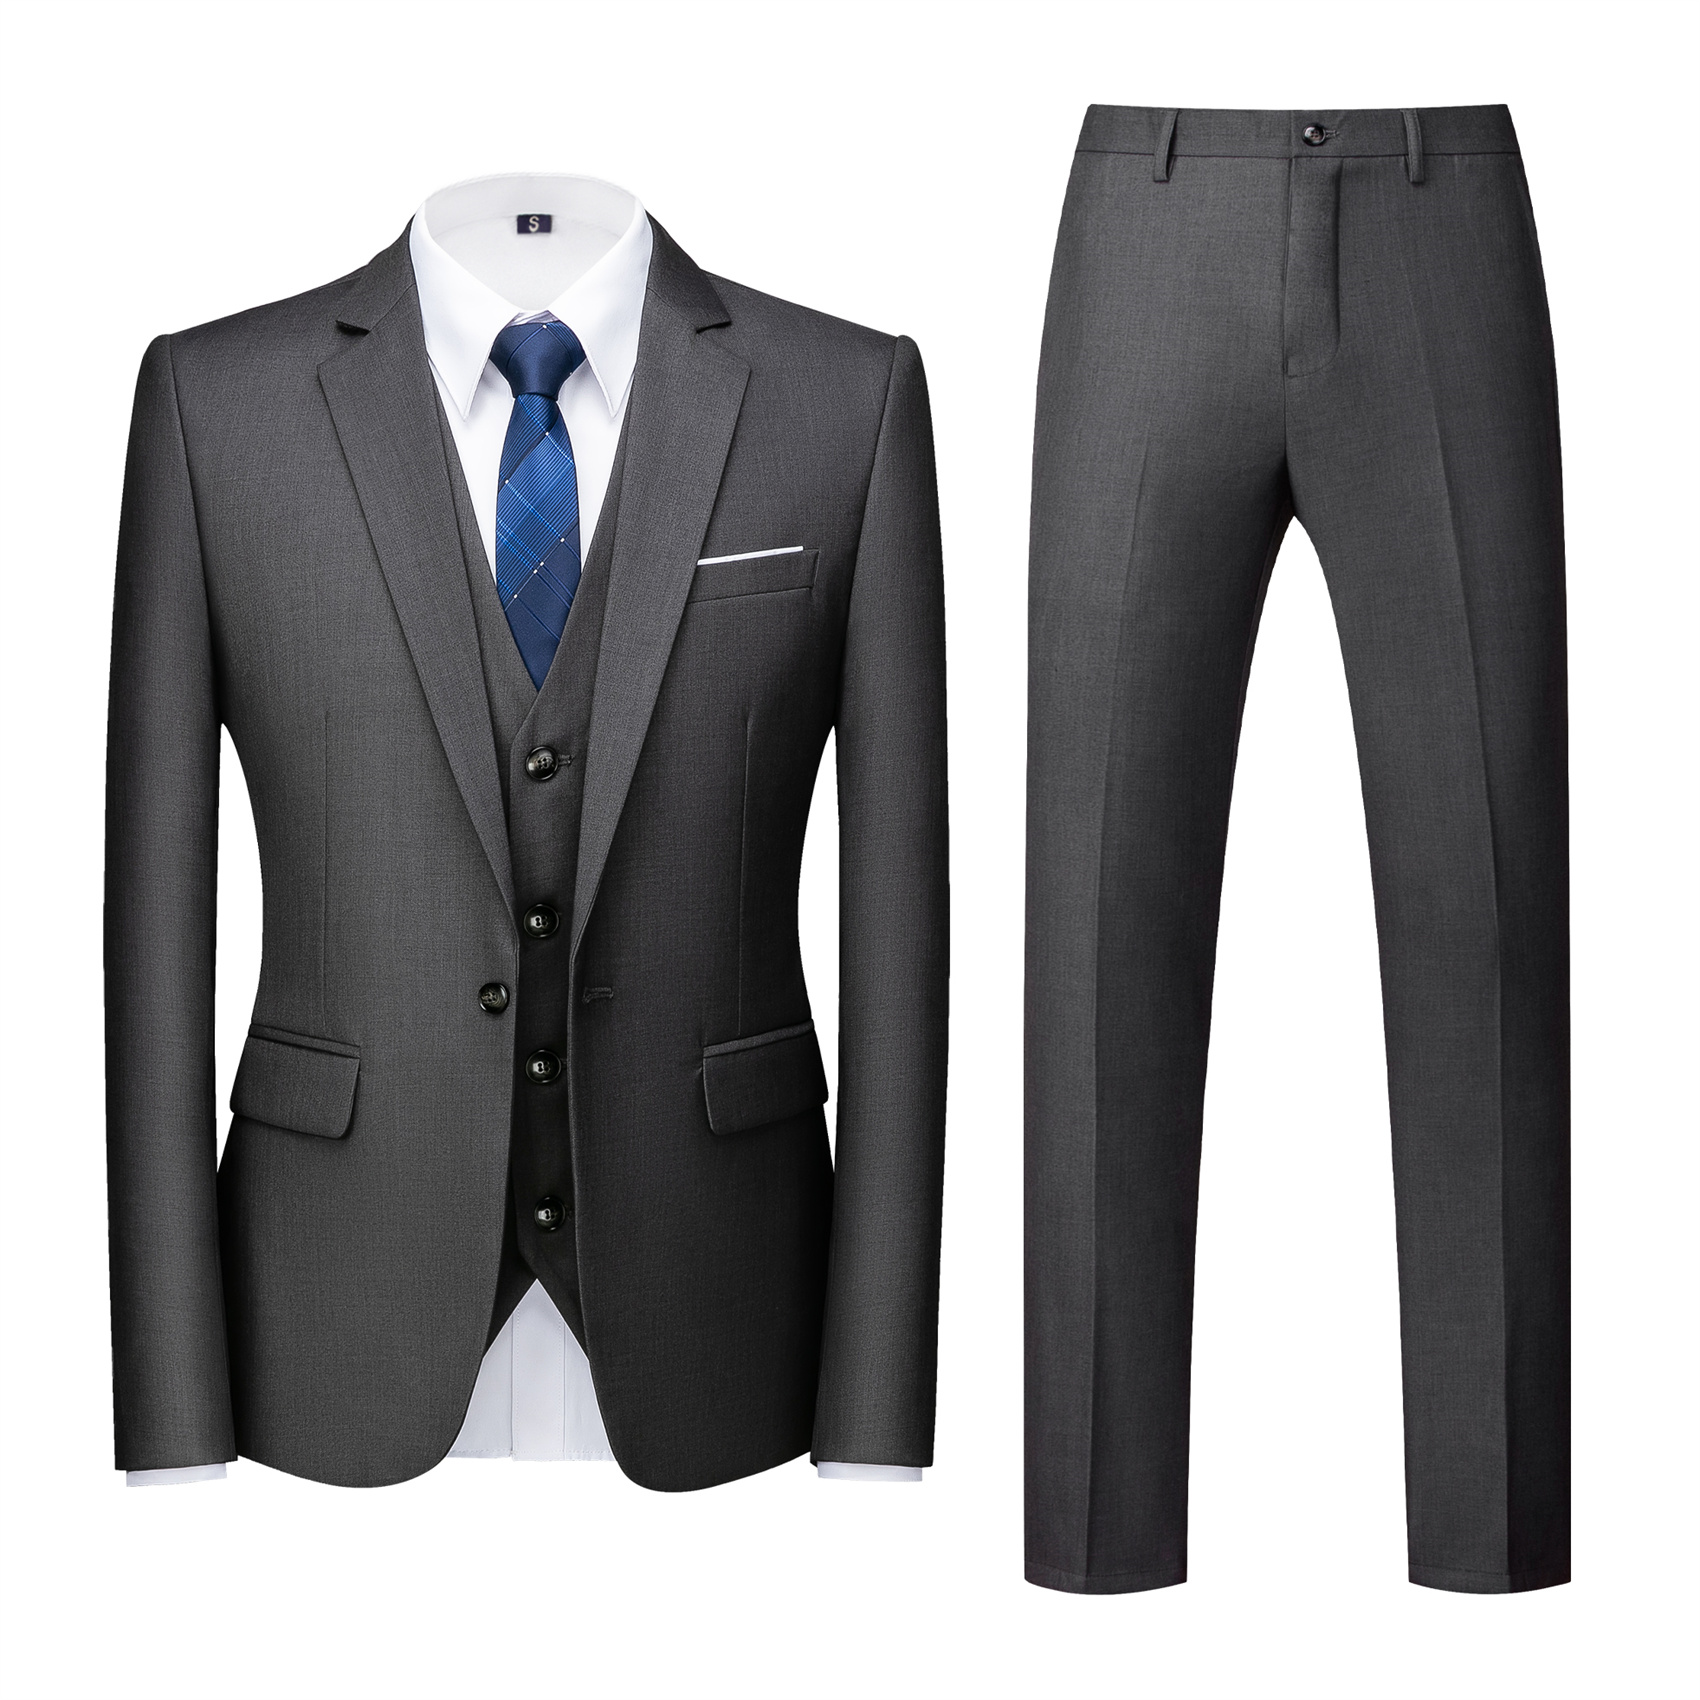 3 Piece Dark Grey Suit for Men, Slim Fit (1 Button)